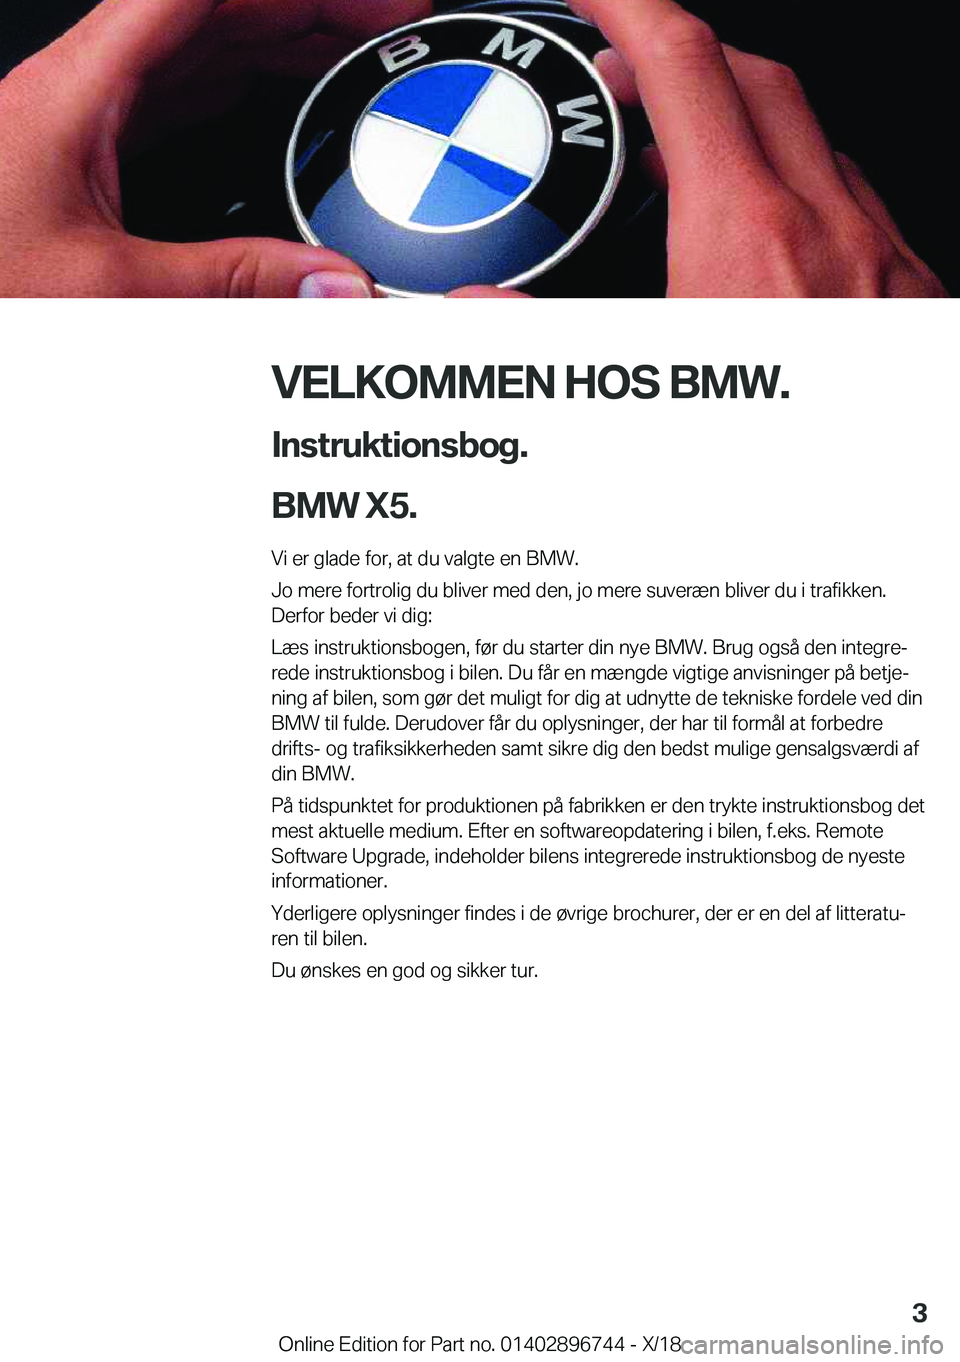 BMW X5 2019  InstruktionsbØger (in Danish) �V�E�L�K�O�M�M�E�N��H�O�S��B�M�W�.
�I�n�s�t�r�u�k�t�i�o�n�s�b�o�g�.
�B�M�W��X�5�. �V�i��e�r��g�l�a�d�e��f�o�r�,��a�t��d�u��v�a�l�g�t�e��e�n��B�M�W�.
�J�o��m�e�r�e��f�o�r�t�r�o�l�i�g��d�u